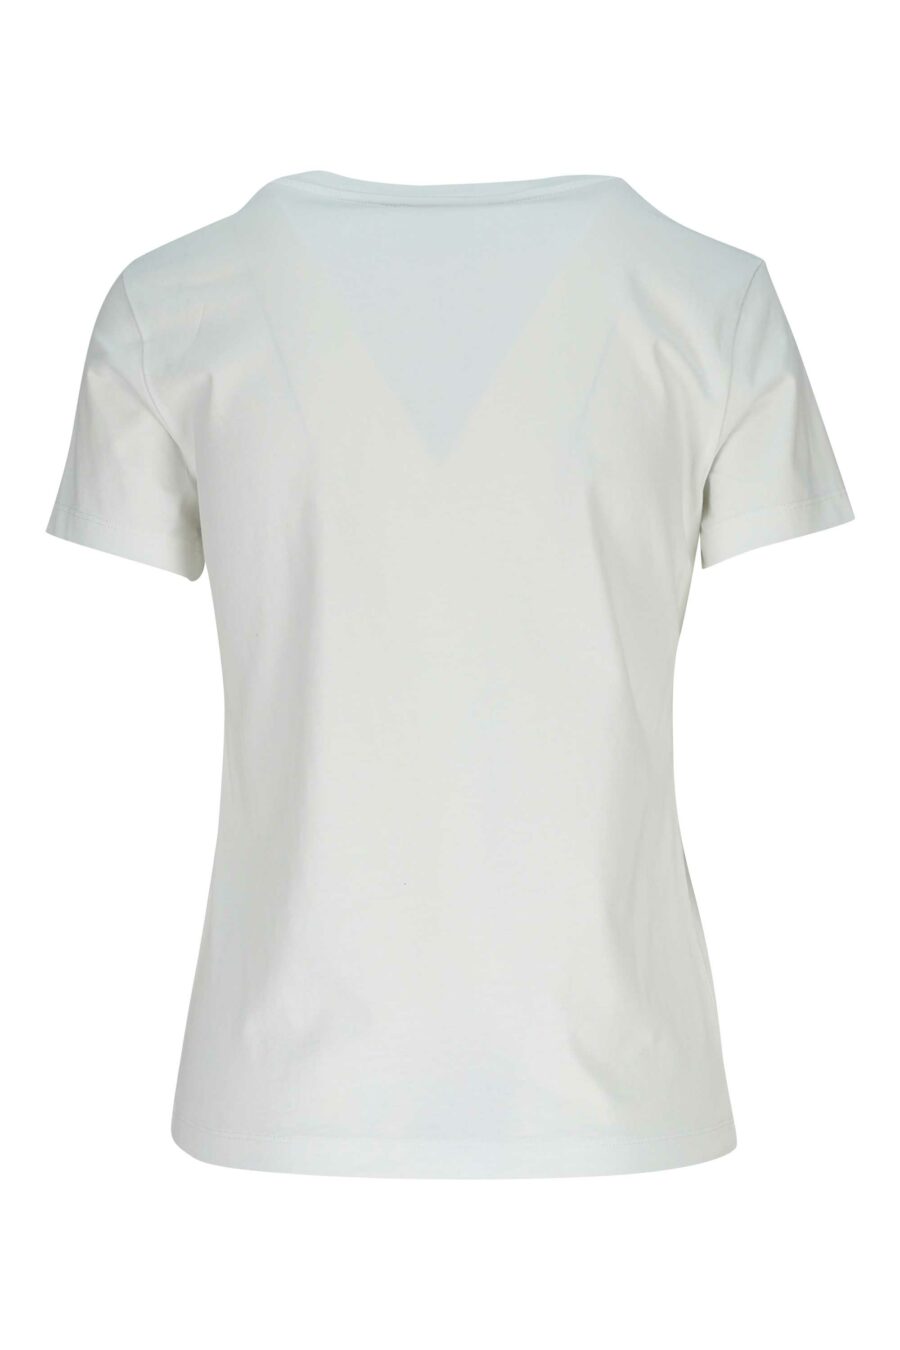 Camiseta blanca con logo "kenzo rose" negra - 3612230637665 1